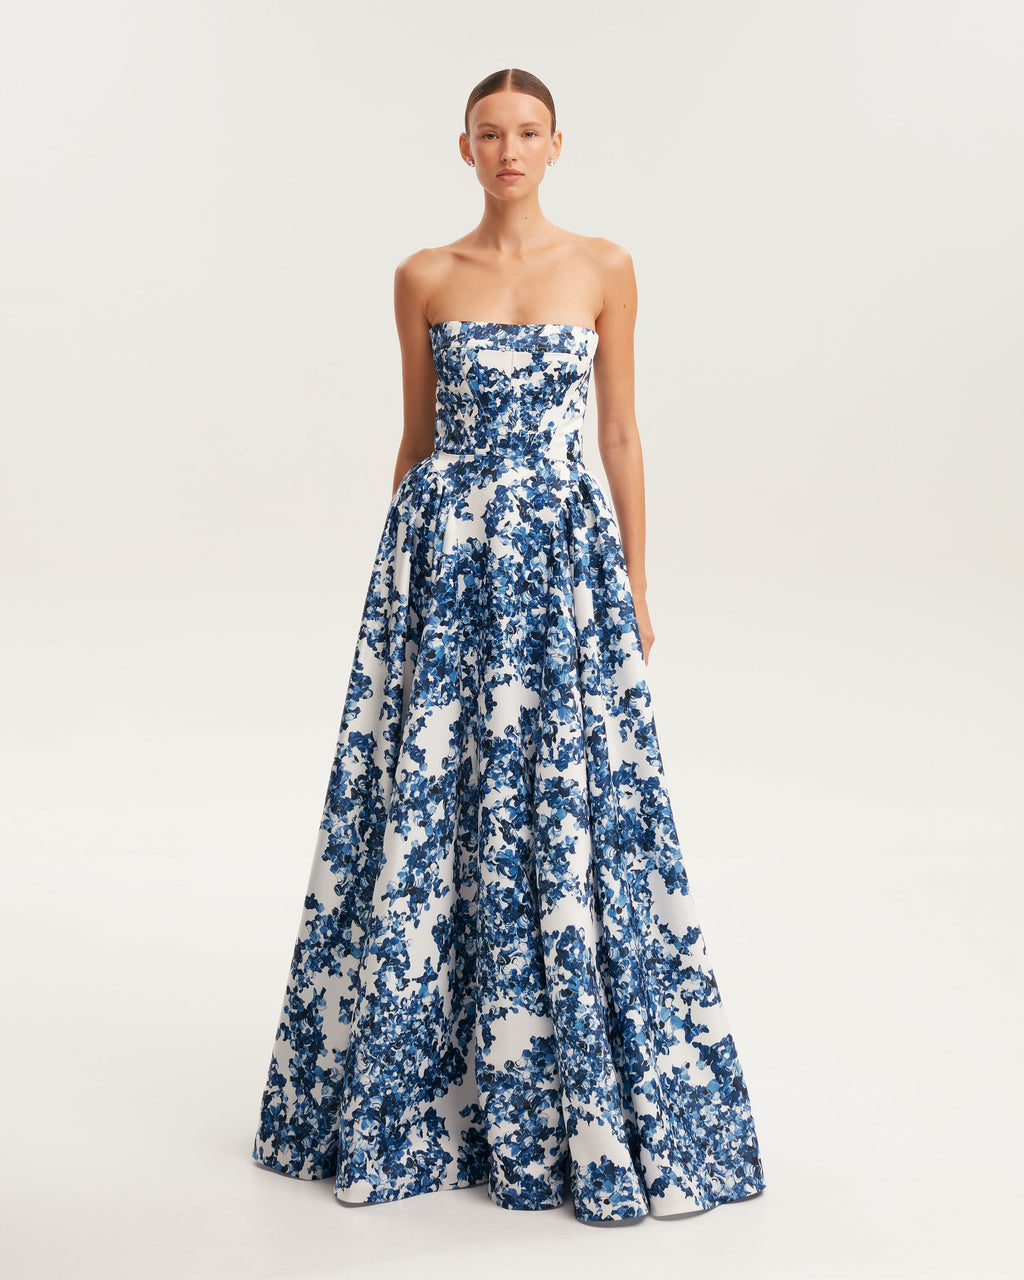 Estelles Dressy Dresses | Farmingdale, NY Wedding Dress Shop